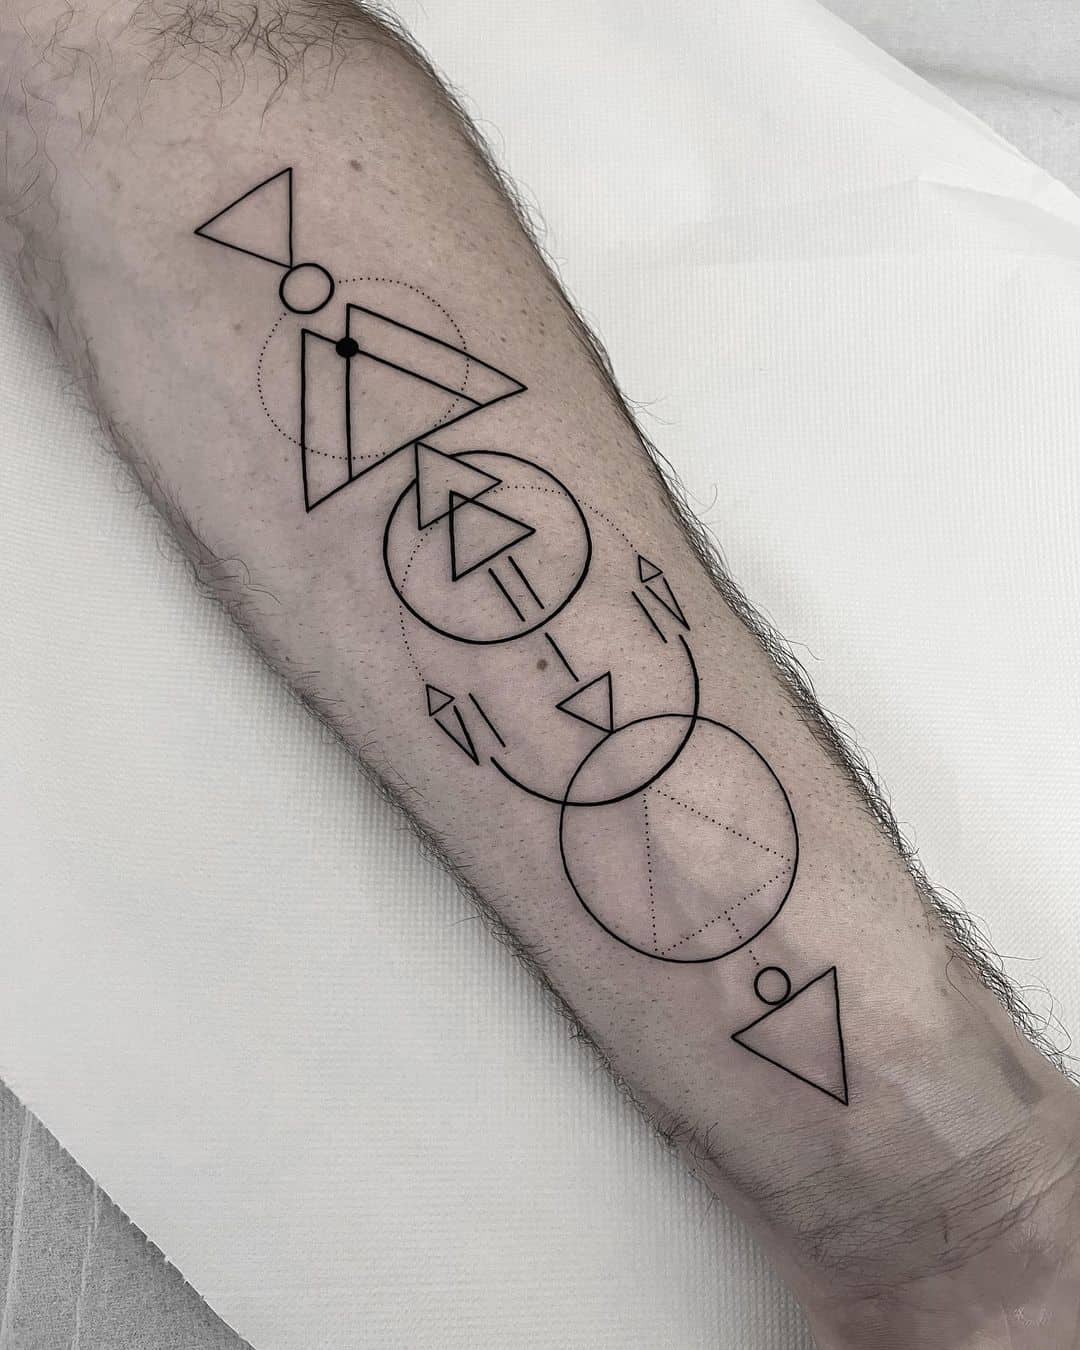 Geometric tattoo on lower arm by anza data